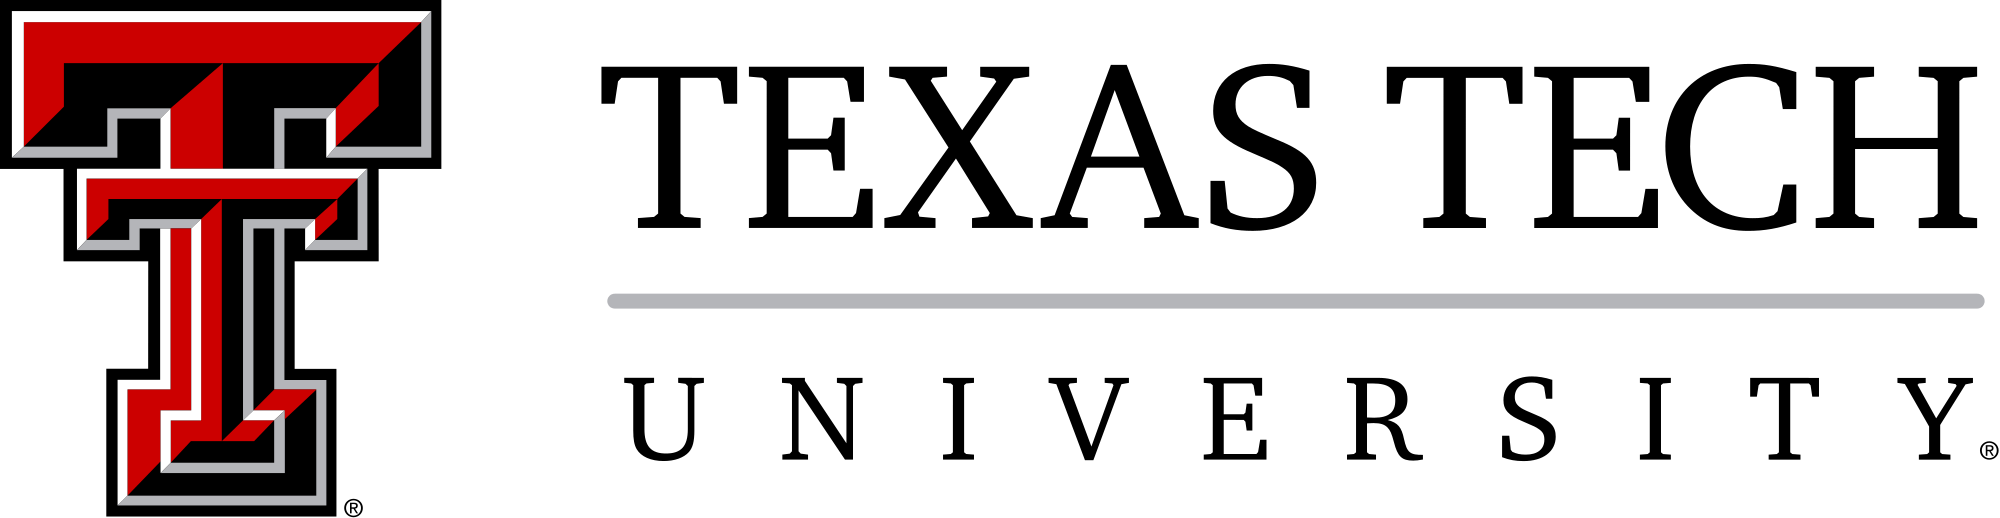 Texas Tech Logo - File:Texas Tech University logo.svg - Wikimedia Commons